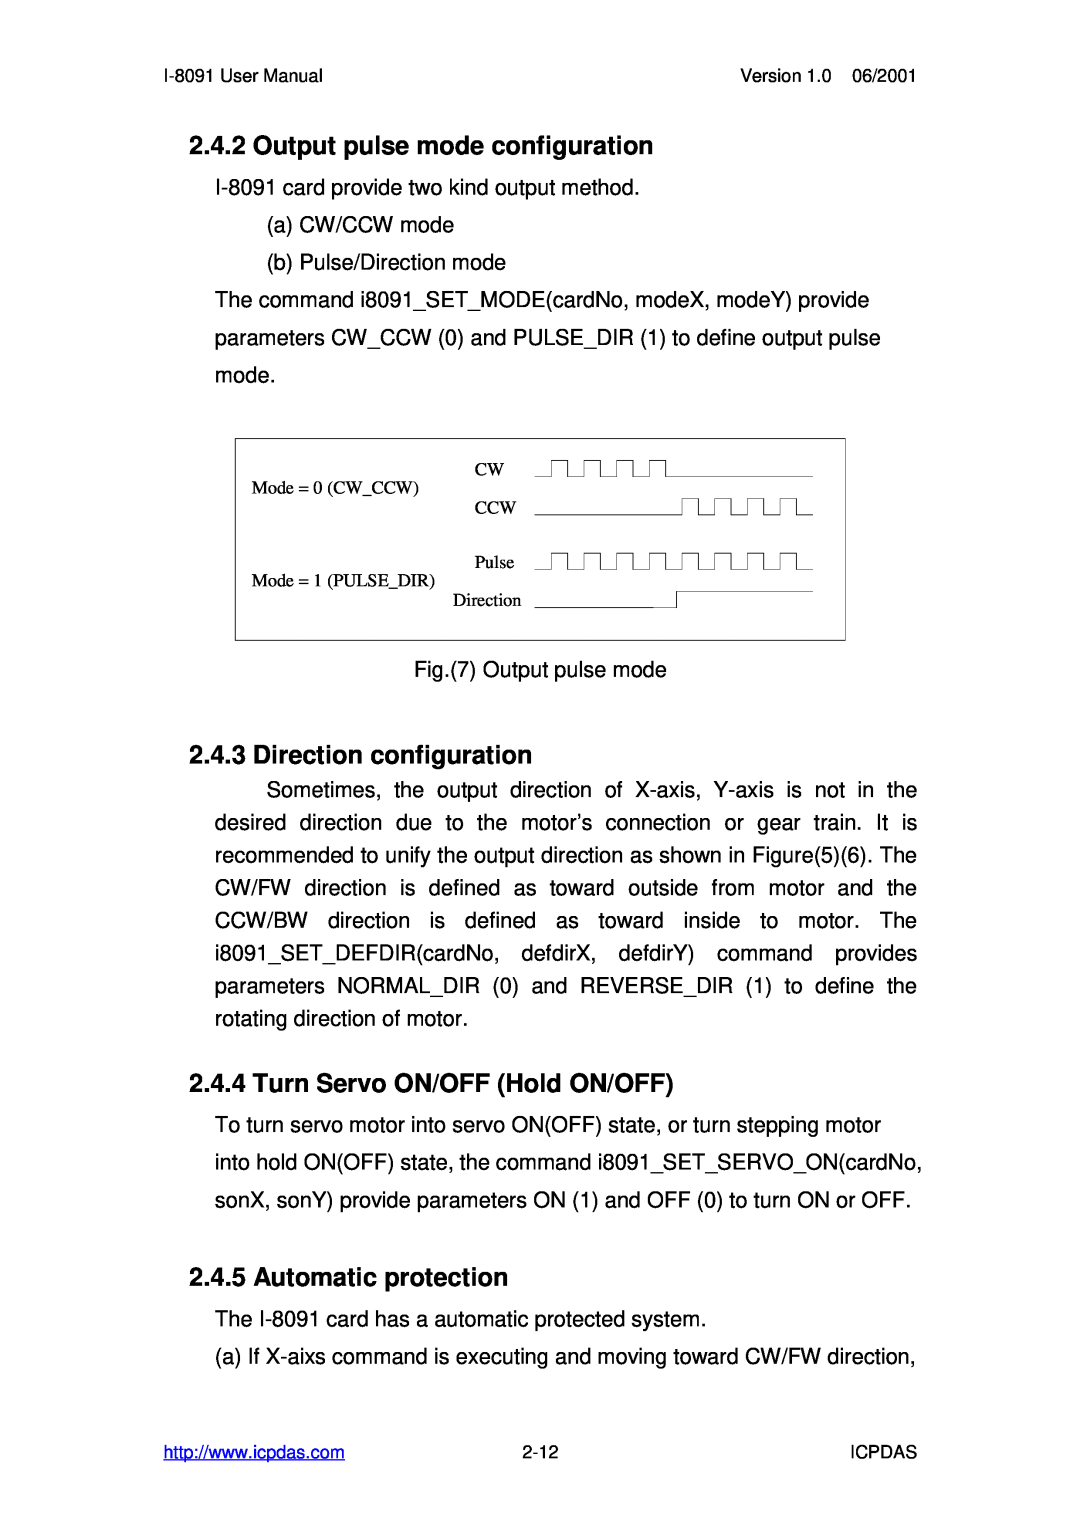 ICP DAS USA 3-axis encoder card, 2-axis stepping/servo user manual Output pulse mode configuration, Direction configuration 